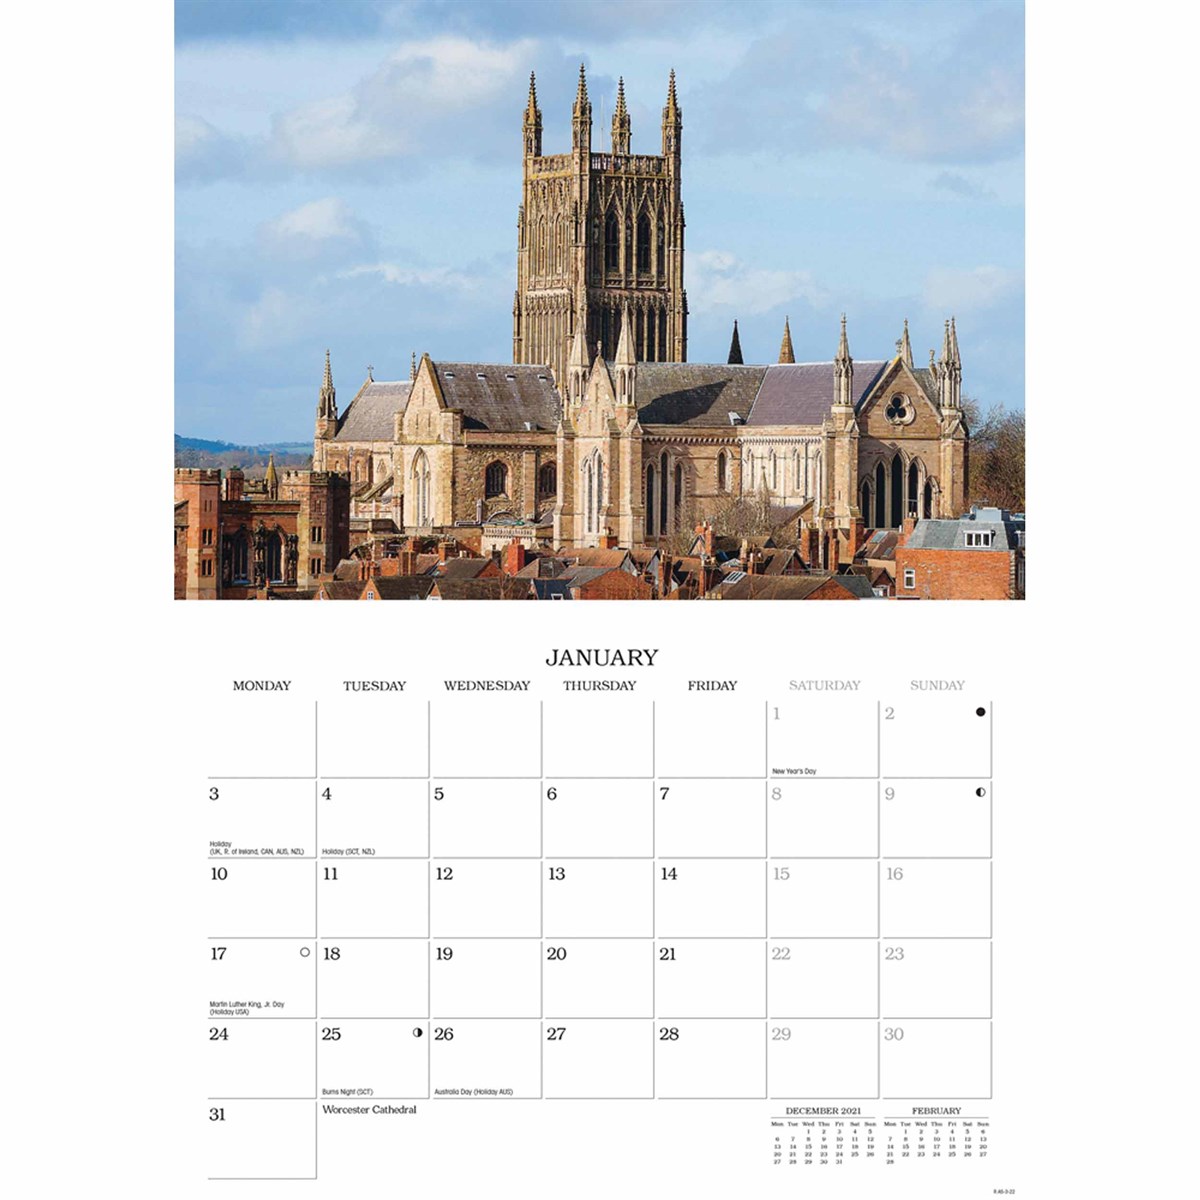 Worcestershire A4 Calendar 2022 by Carousel Calendars 220198 